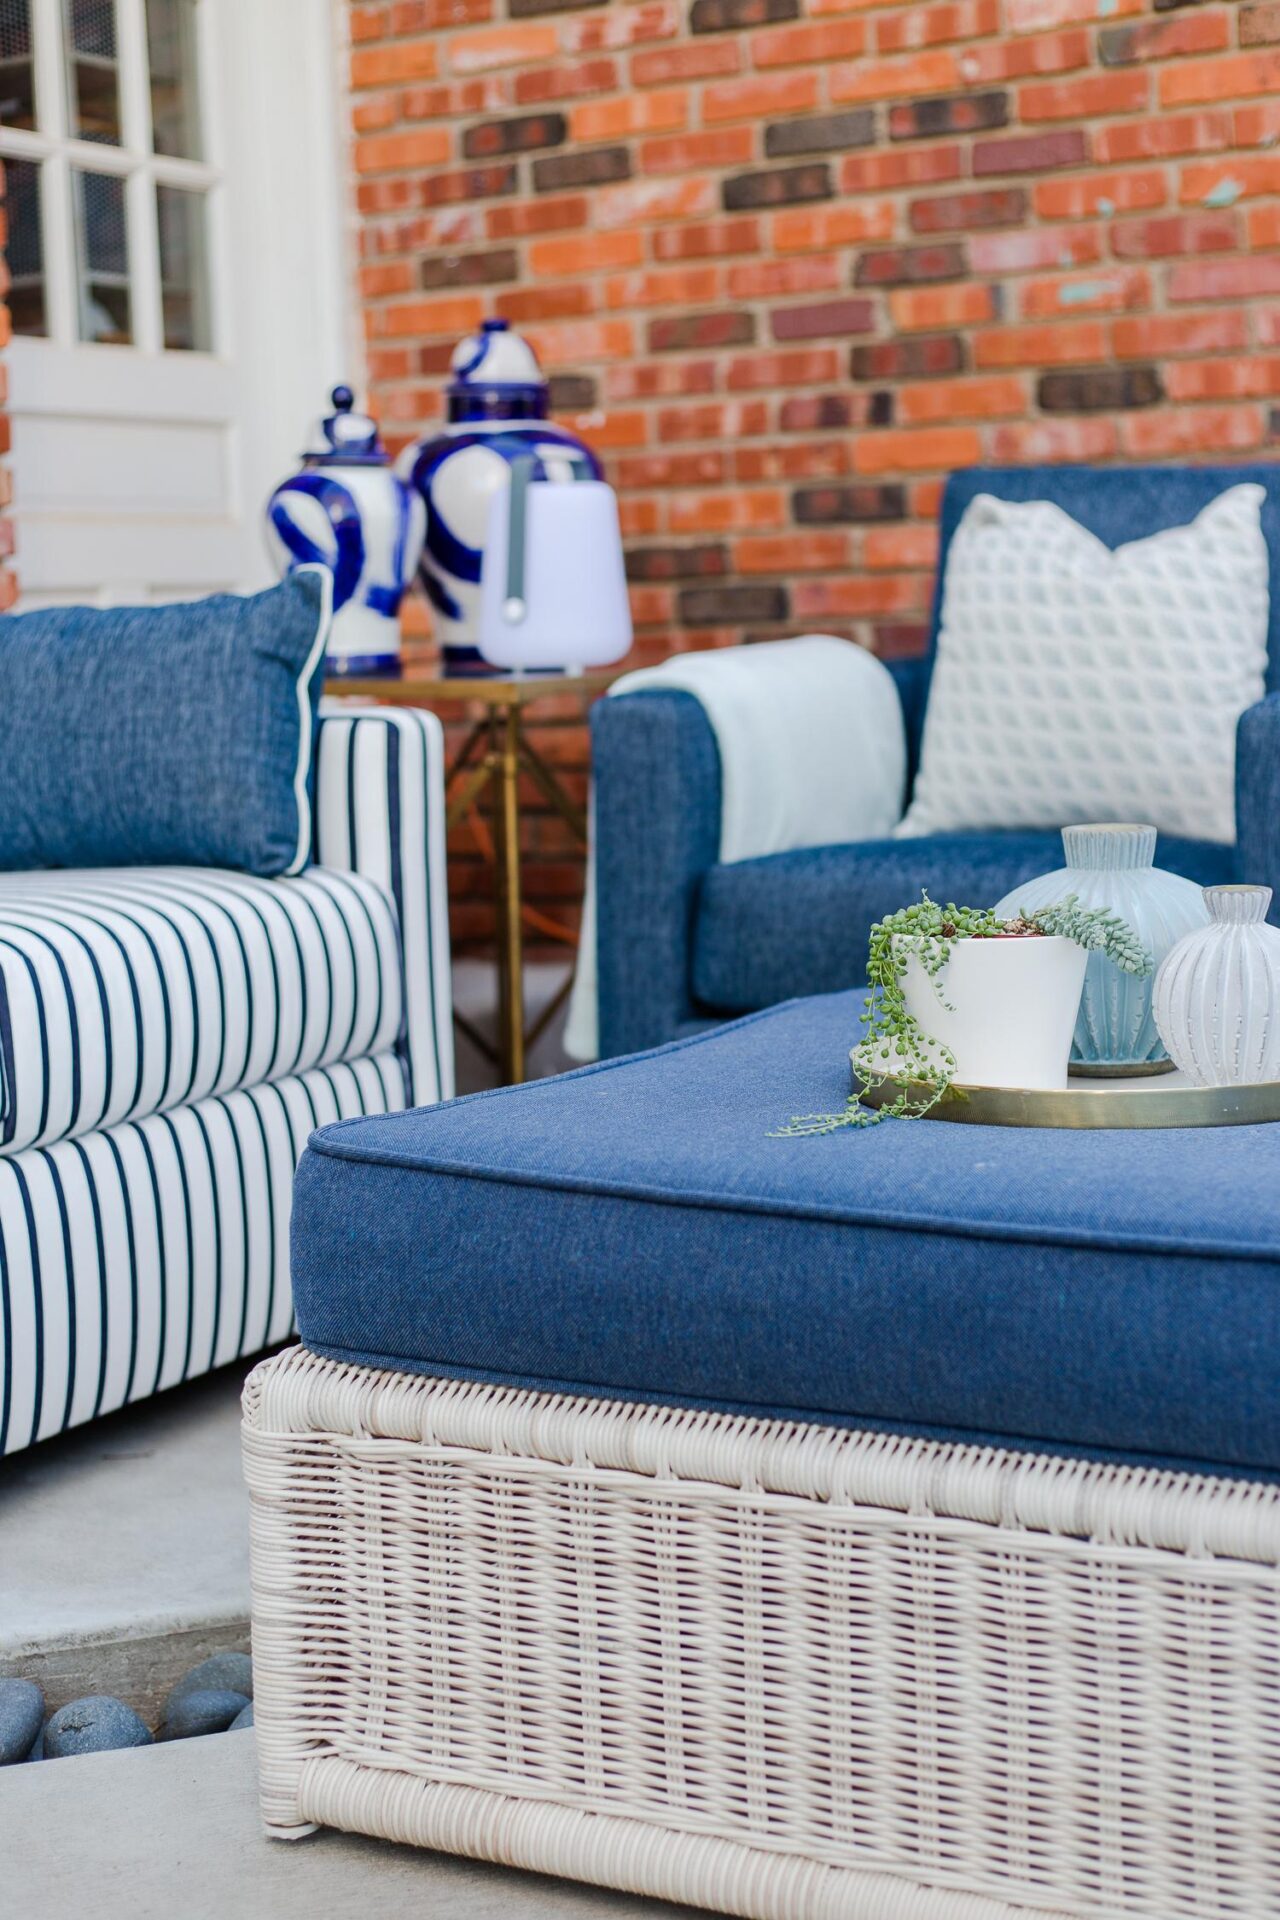 upholstered outdoor living furniture / oklahoma city interior designer / patio design / patio furniture